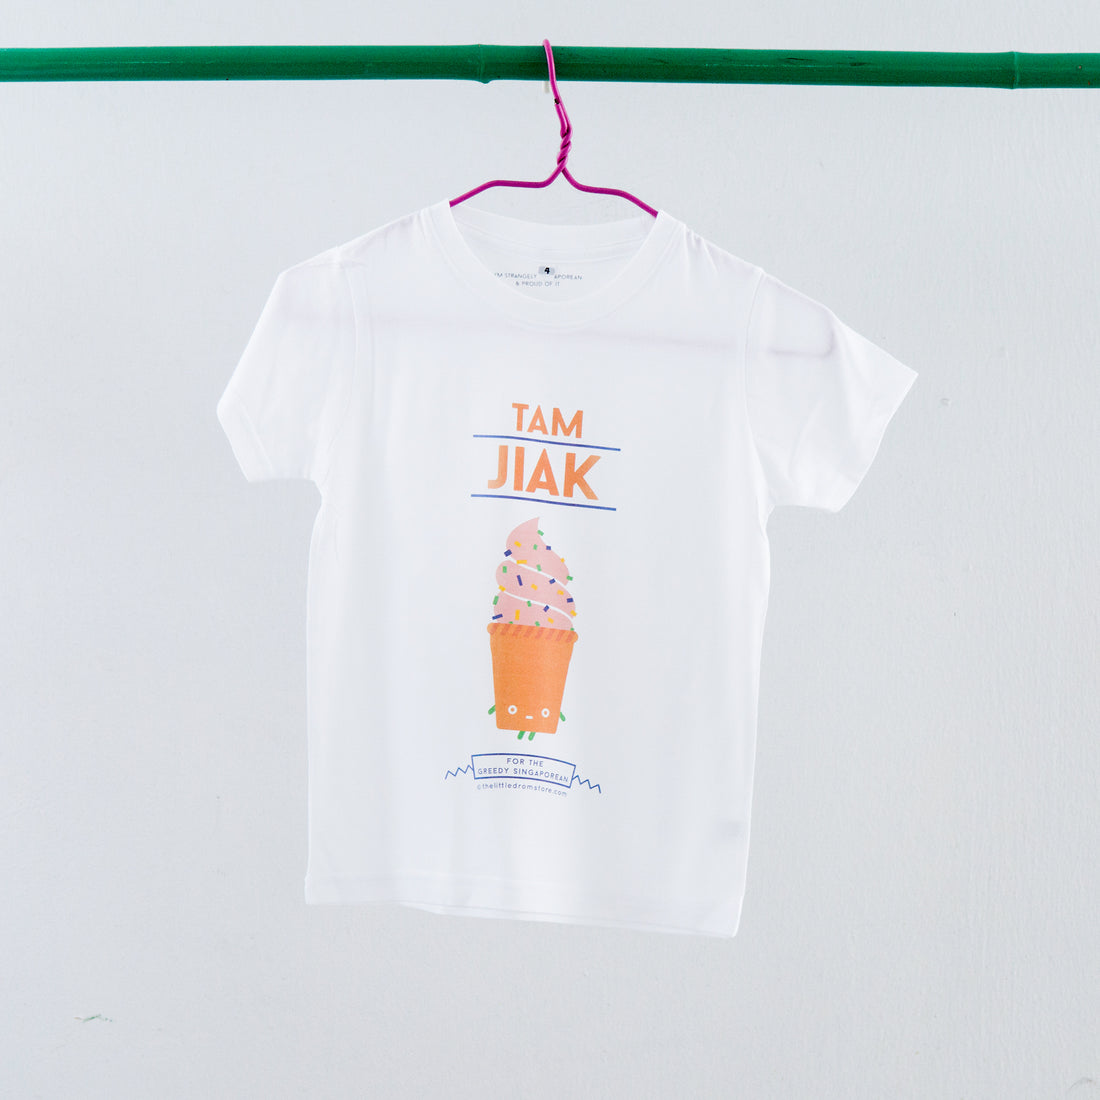 Tam Jiak T-Shirt